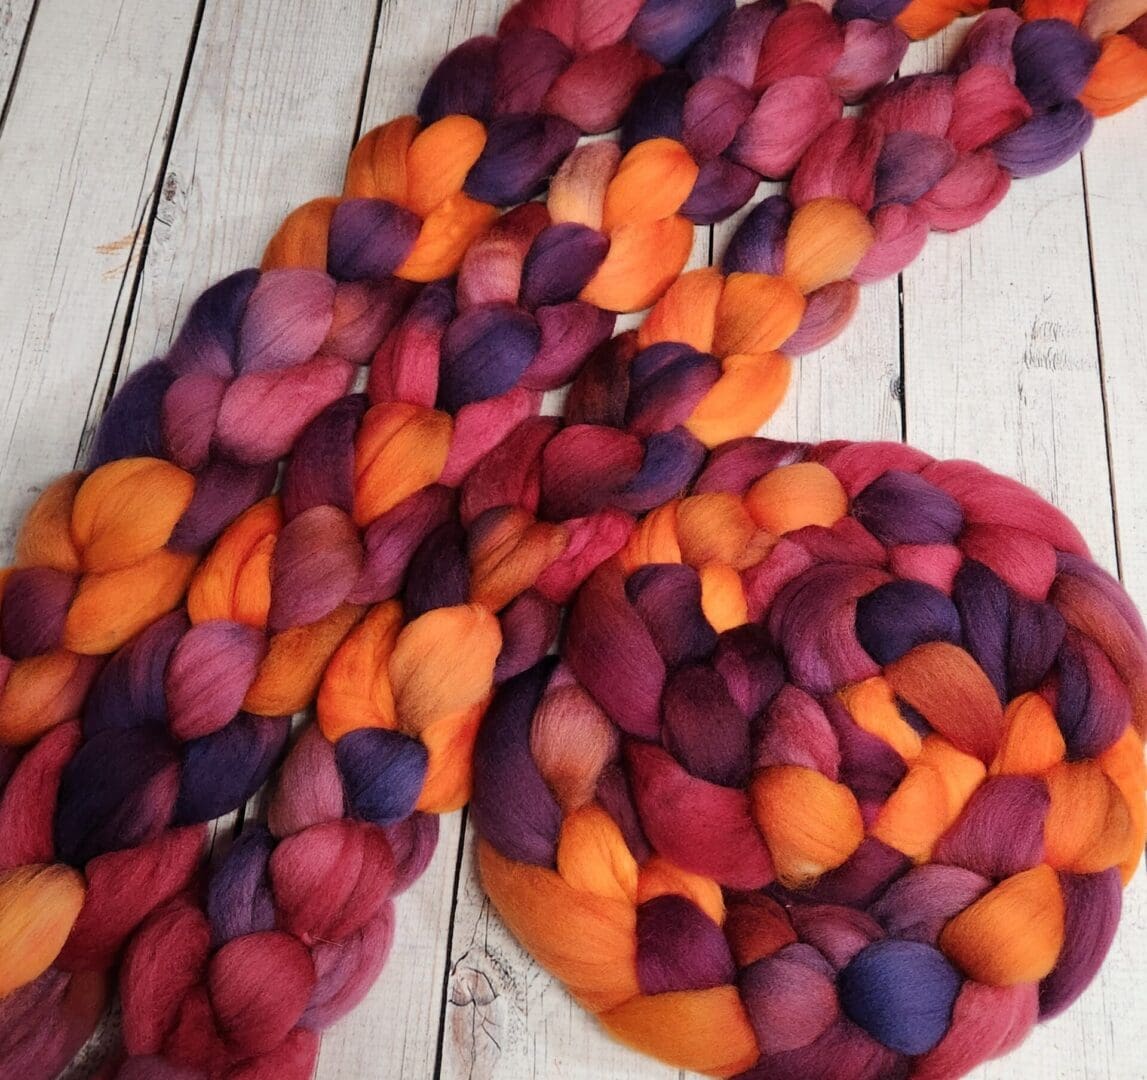 Braided yarn in orange, red, and purple.